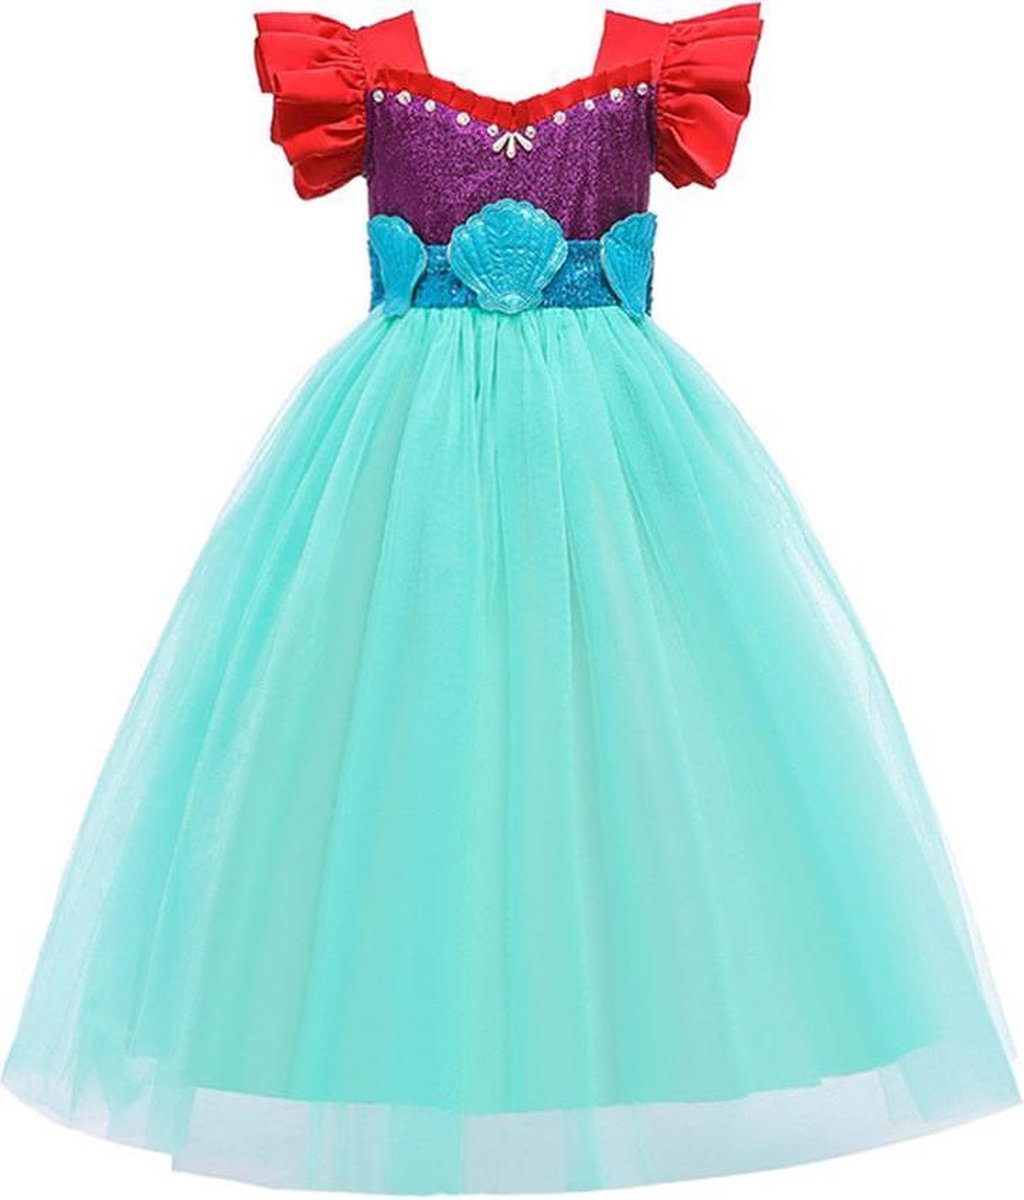 Prinses - Zeemeermin Ariel jurk - De Kleine Zeemeermin - Prinsessenjurk - Verkleedkleding - Zeegroen - 98/104 (2/3 jaar)